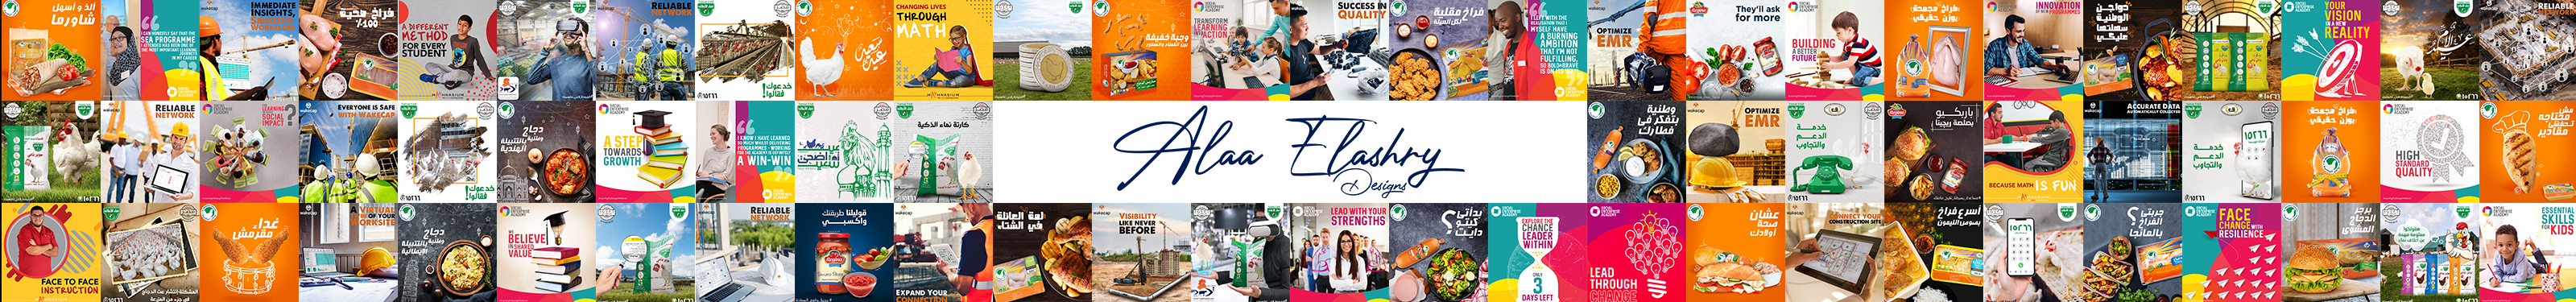 alaa elashry's profile banner